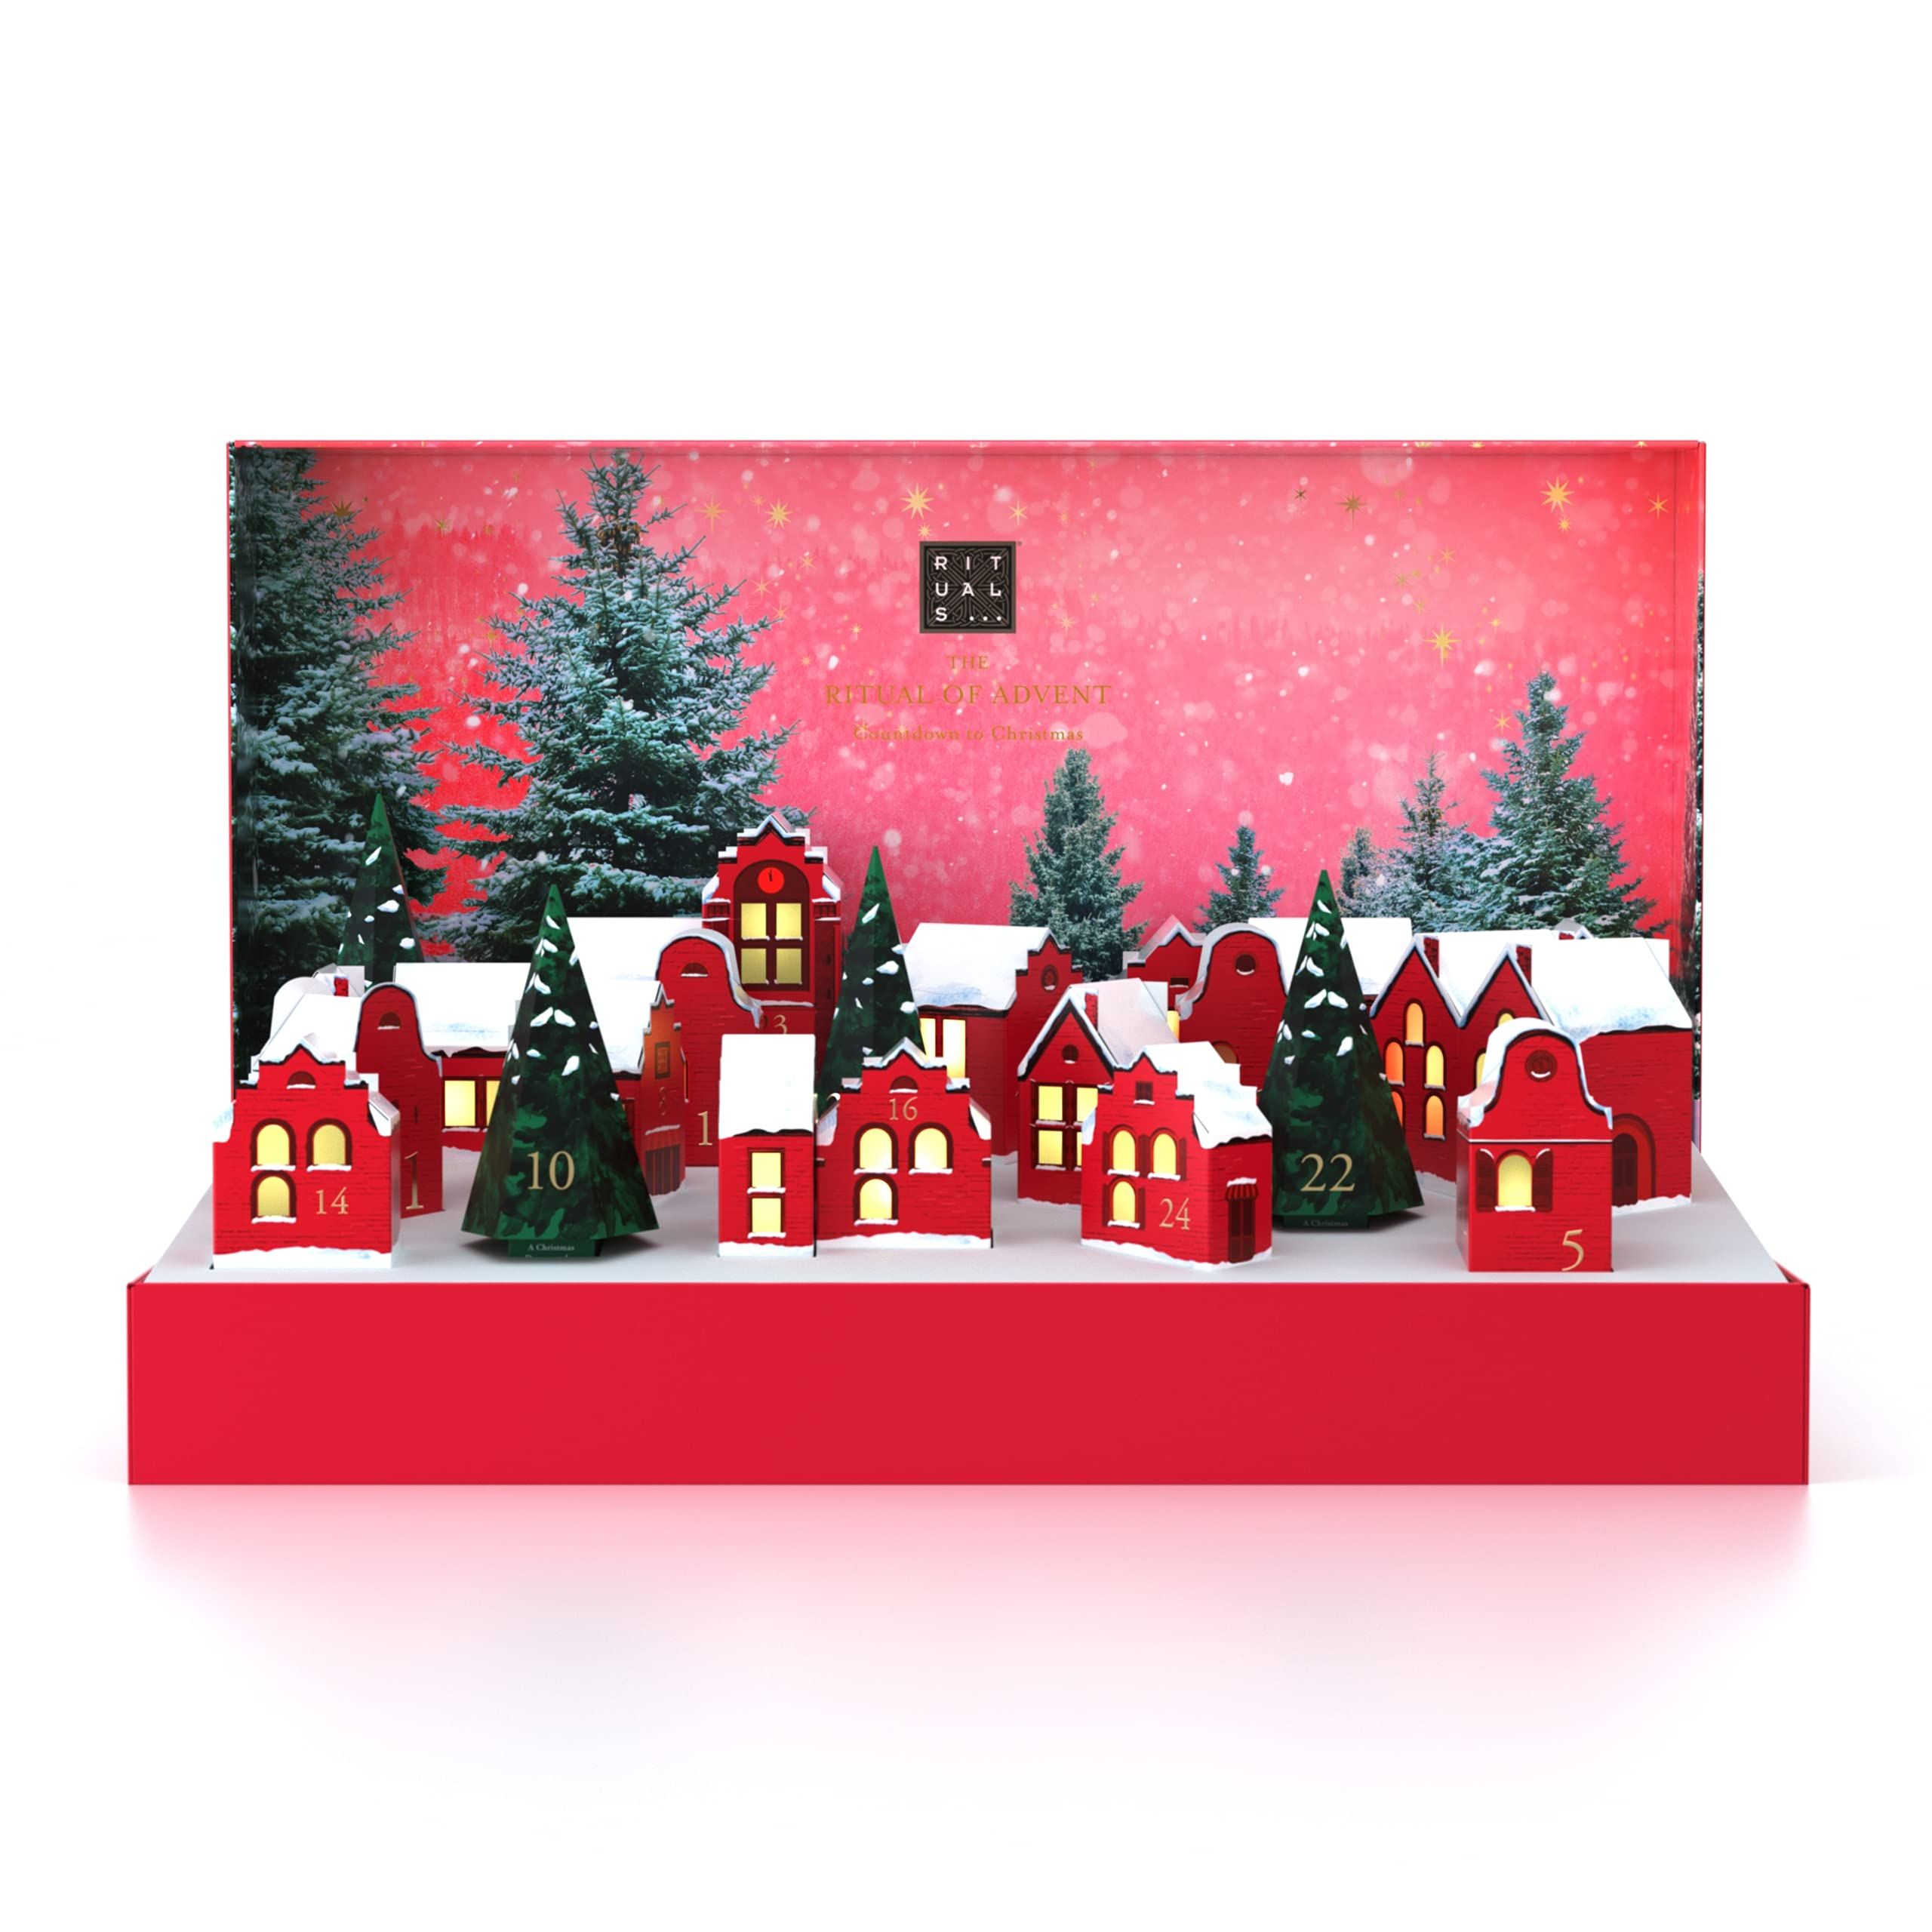 RITUALS Advent Calendar 2021 Gift Set - Christmas Countdown Calendar - Beauty Advent Set - Luxurious | Amazon (US)